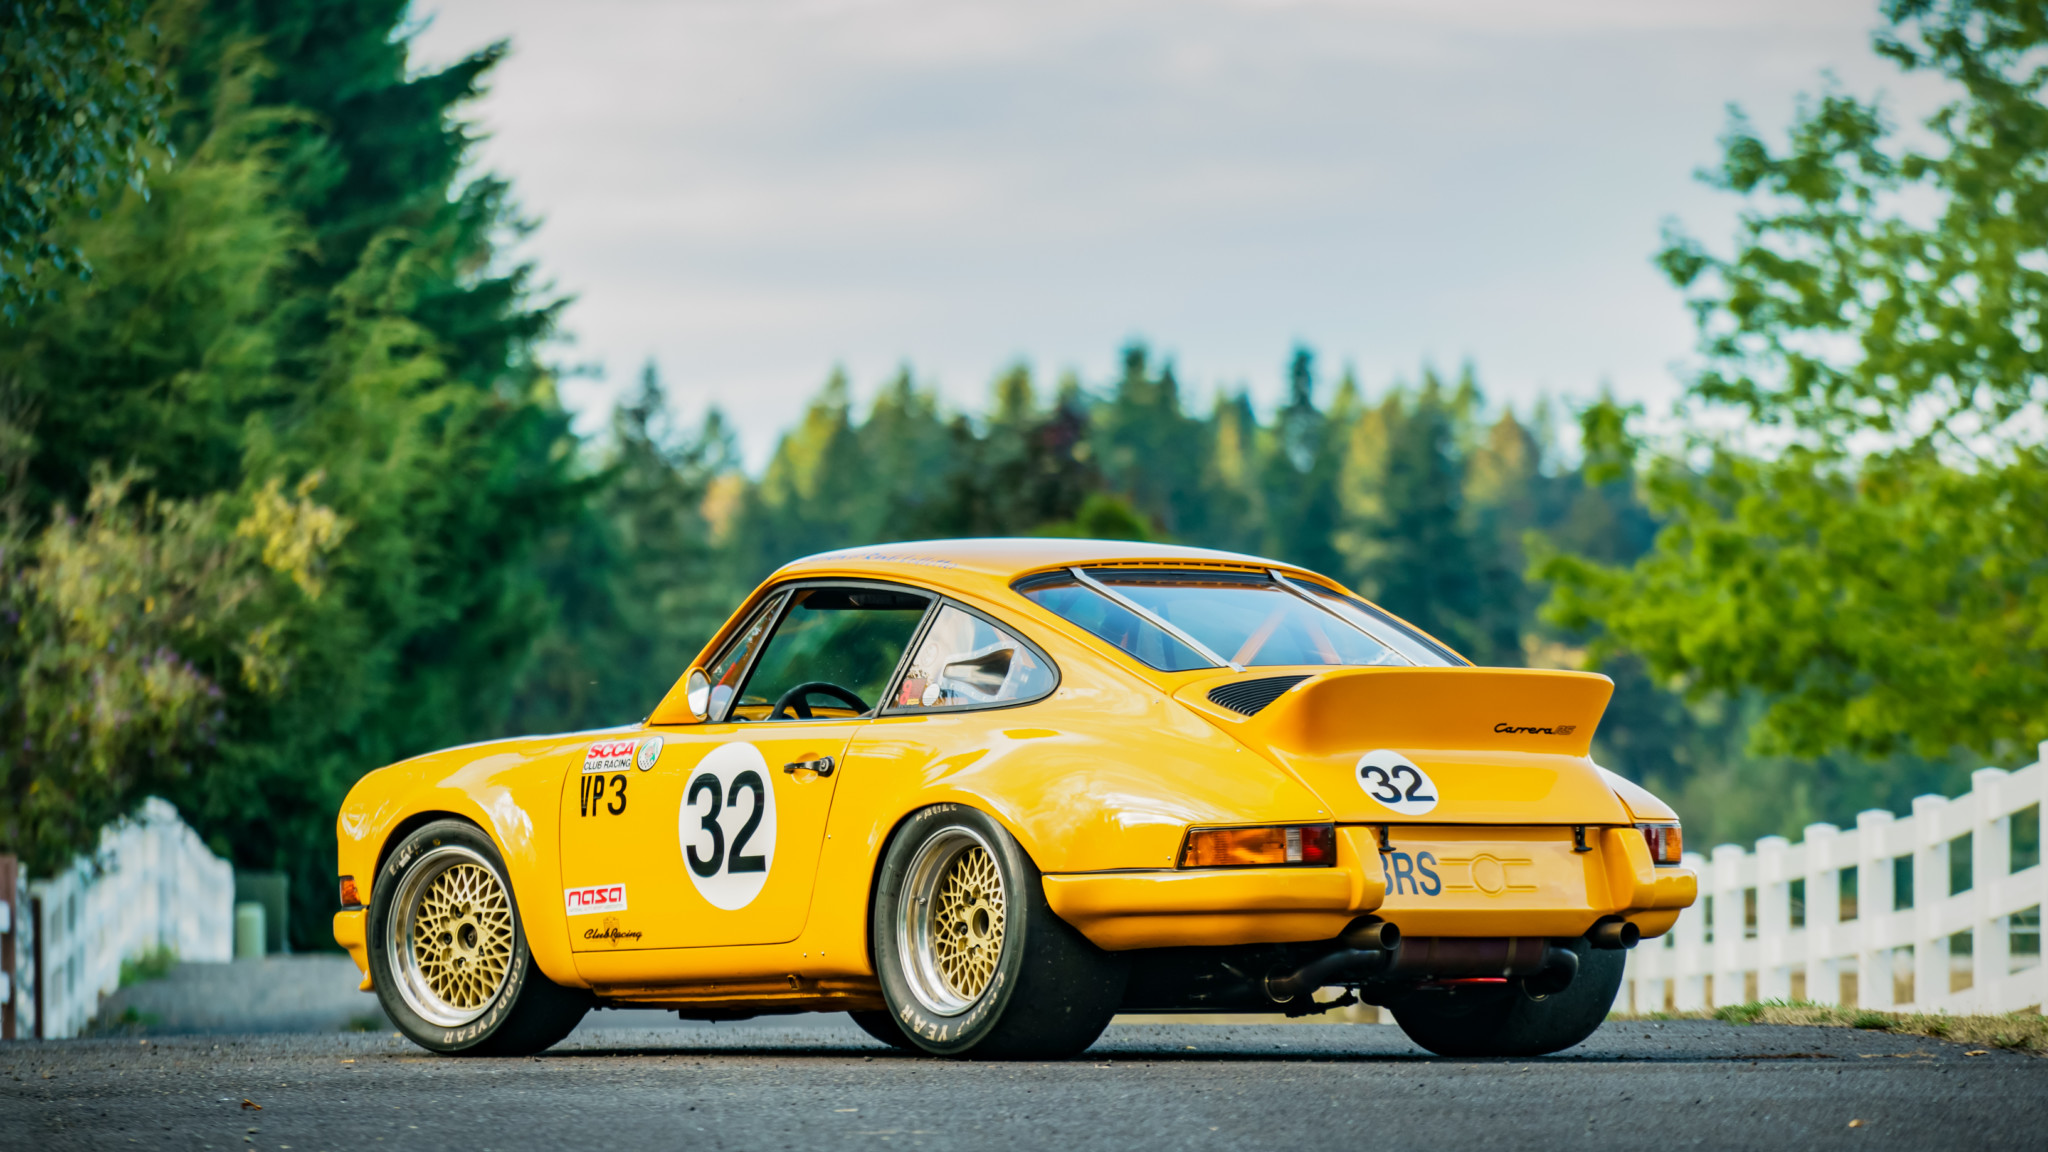 1970 Porsche 911s Race Car Hd Wallpaper Background Image 2048x1152